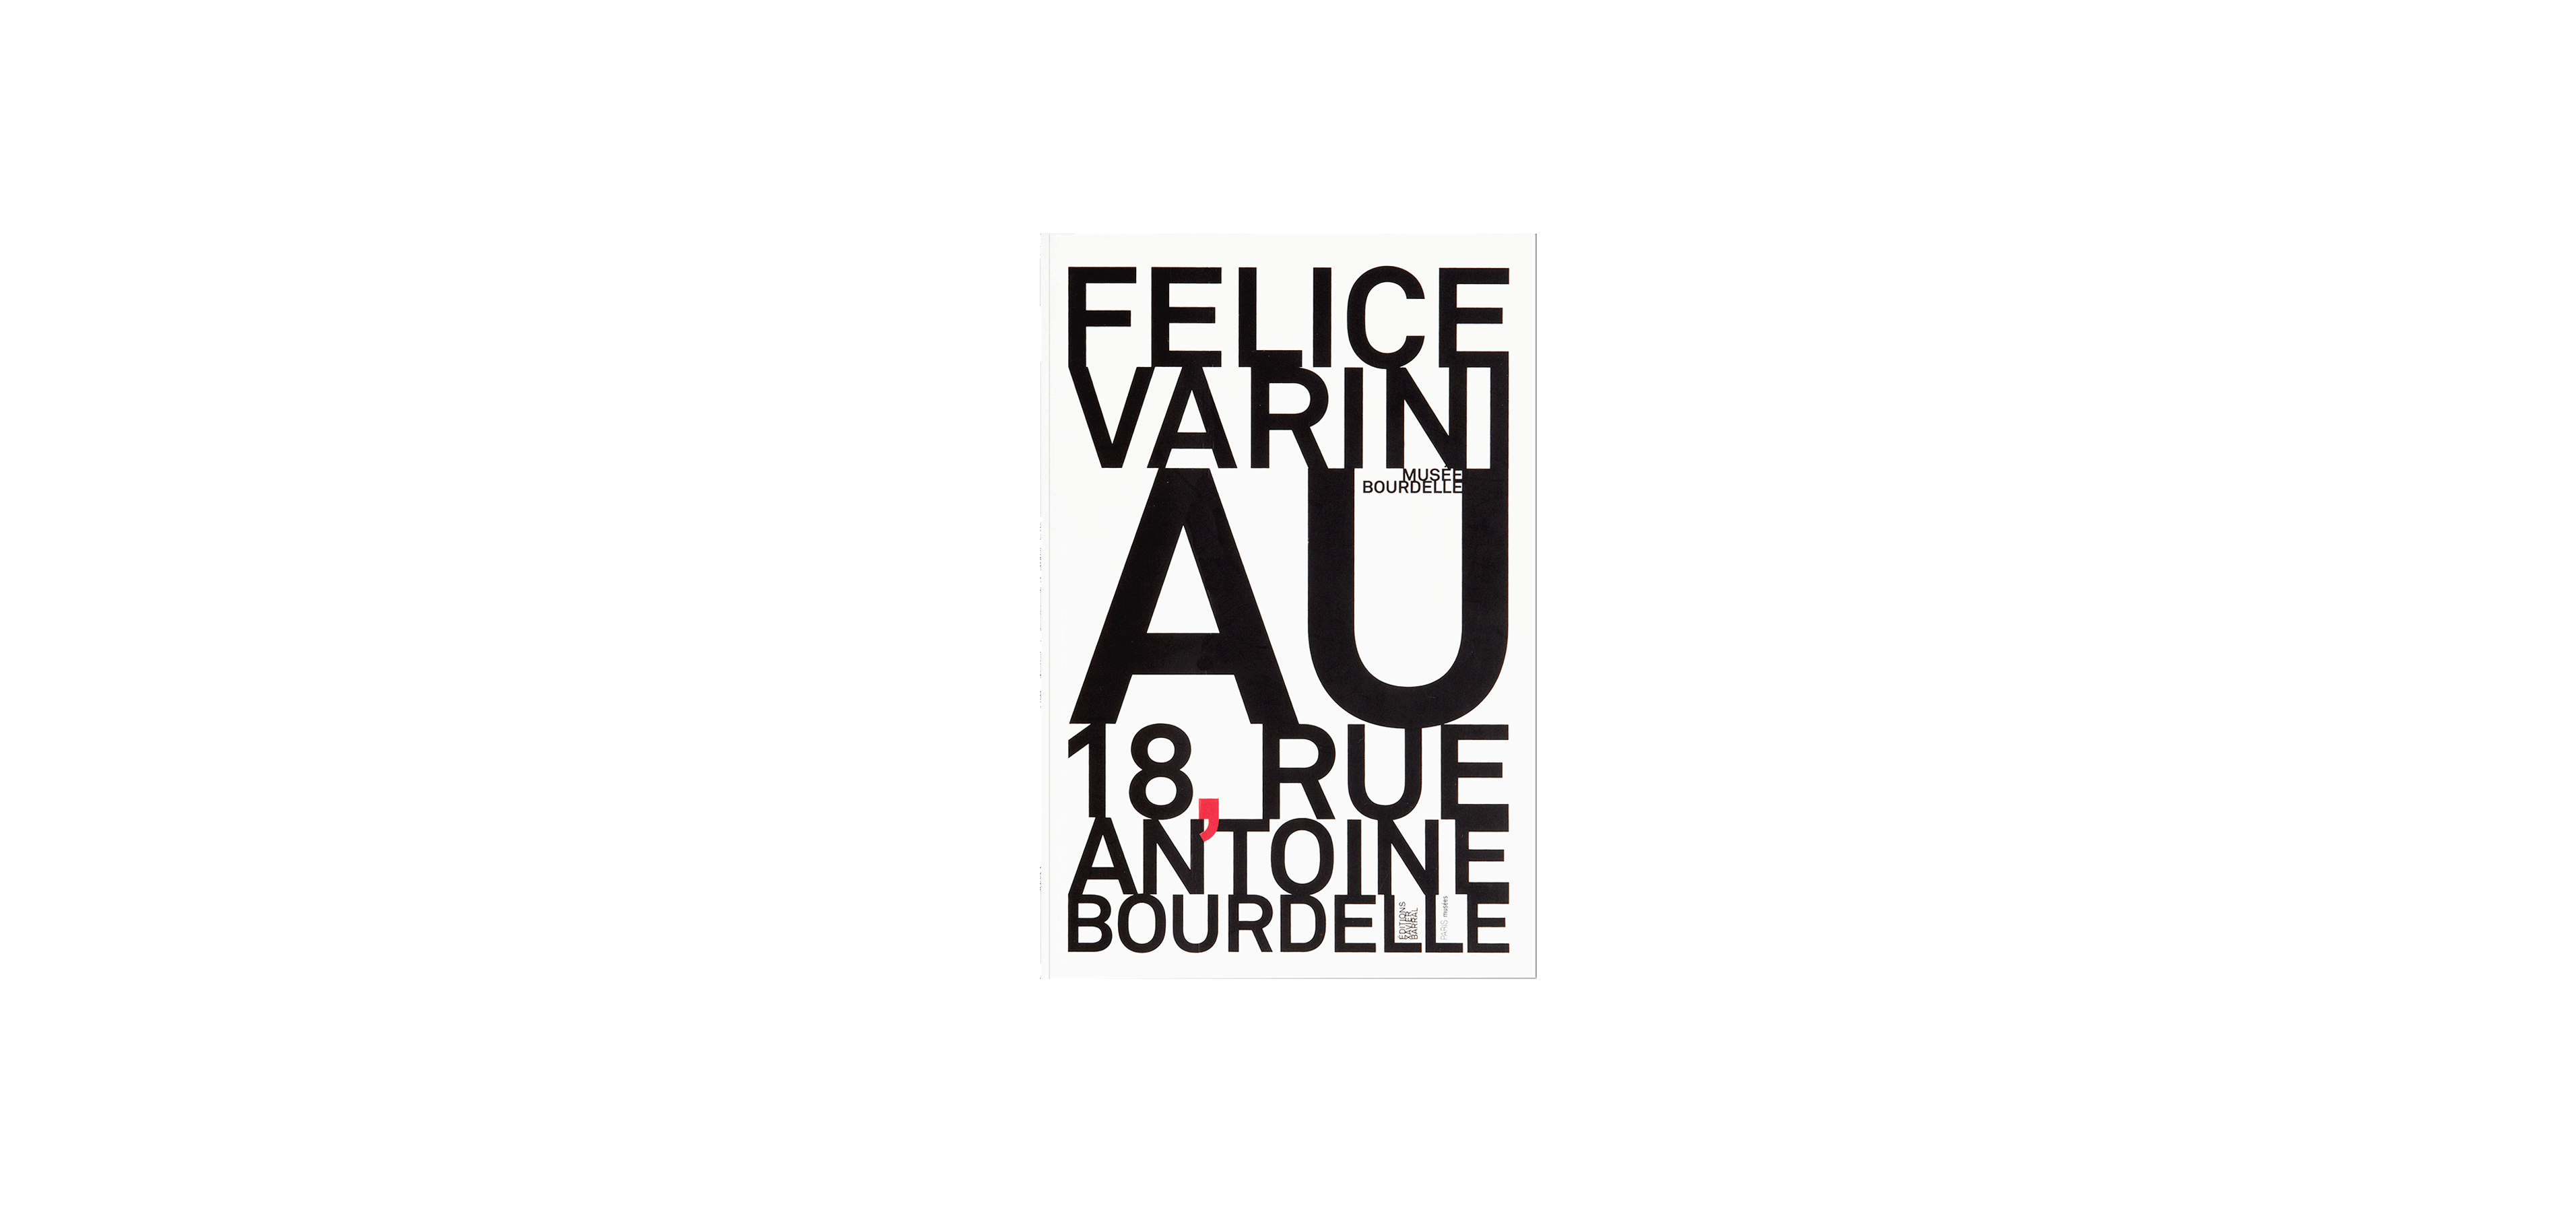 Felice Varini au 18, rue Antoine Bourdelle (sold out)